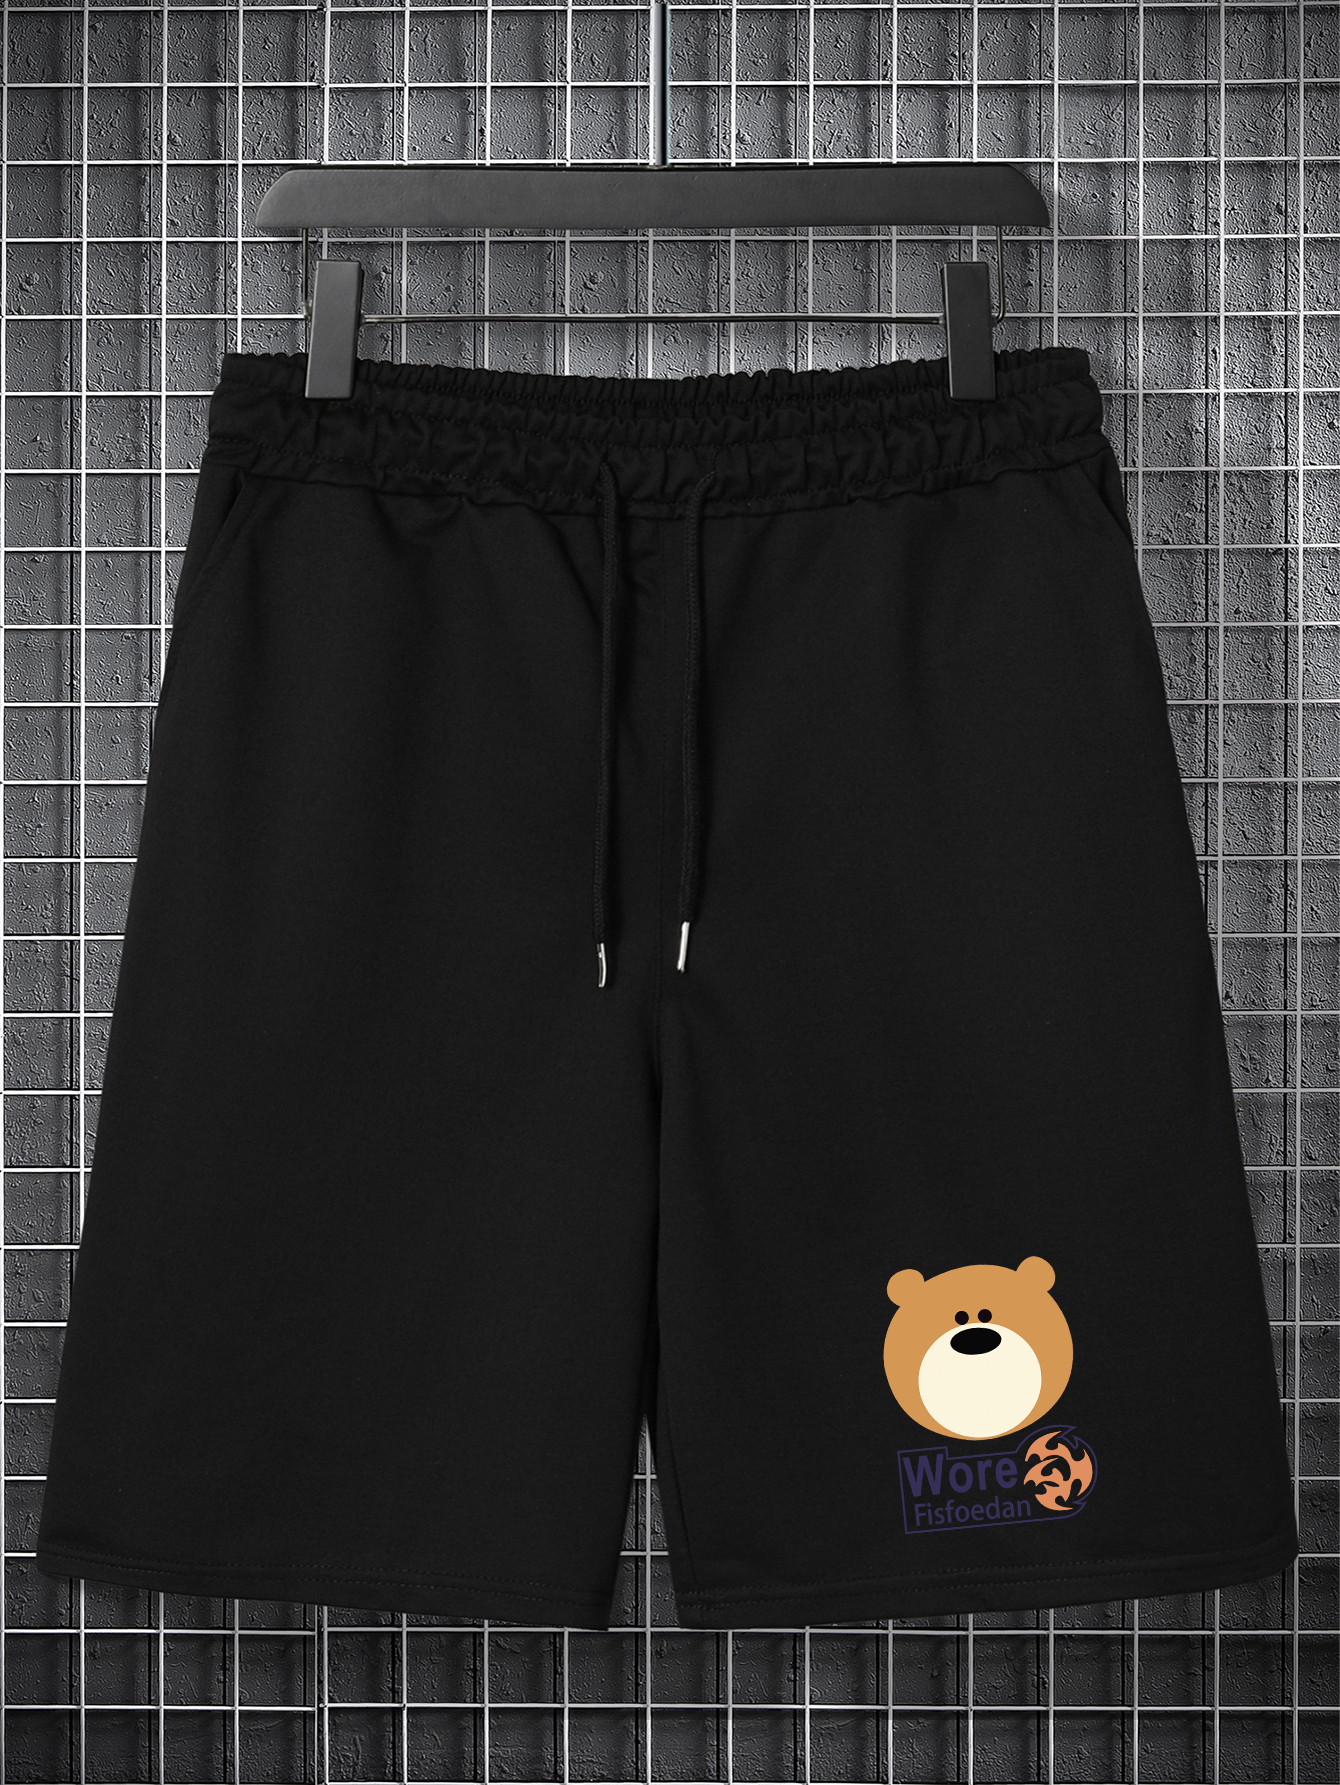 Moschino Kids teddy bear-print drawstring shorts - Red